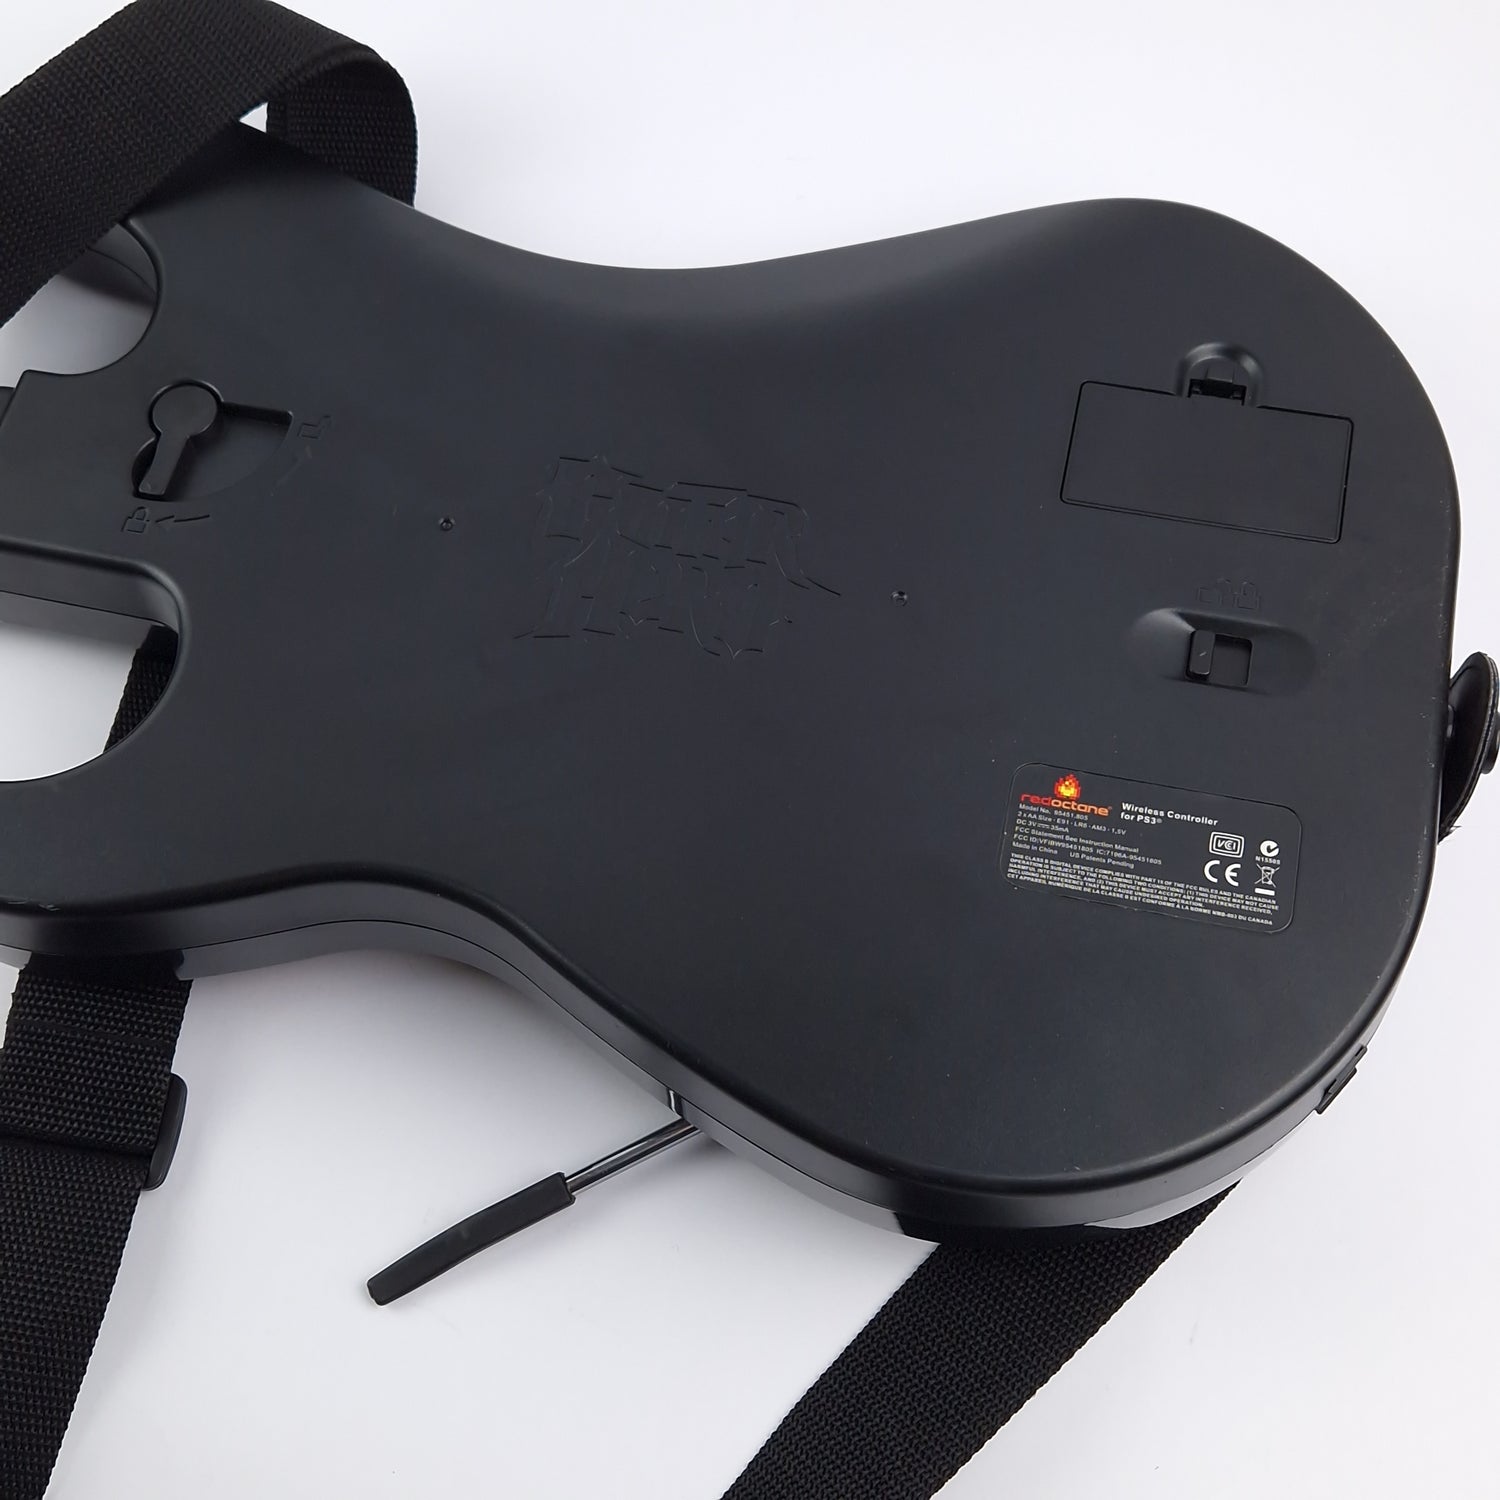 Sony Playstation 3 Game: Guitar Hero Metallica + Guitar - OVP PAL PS3